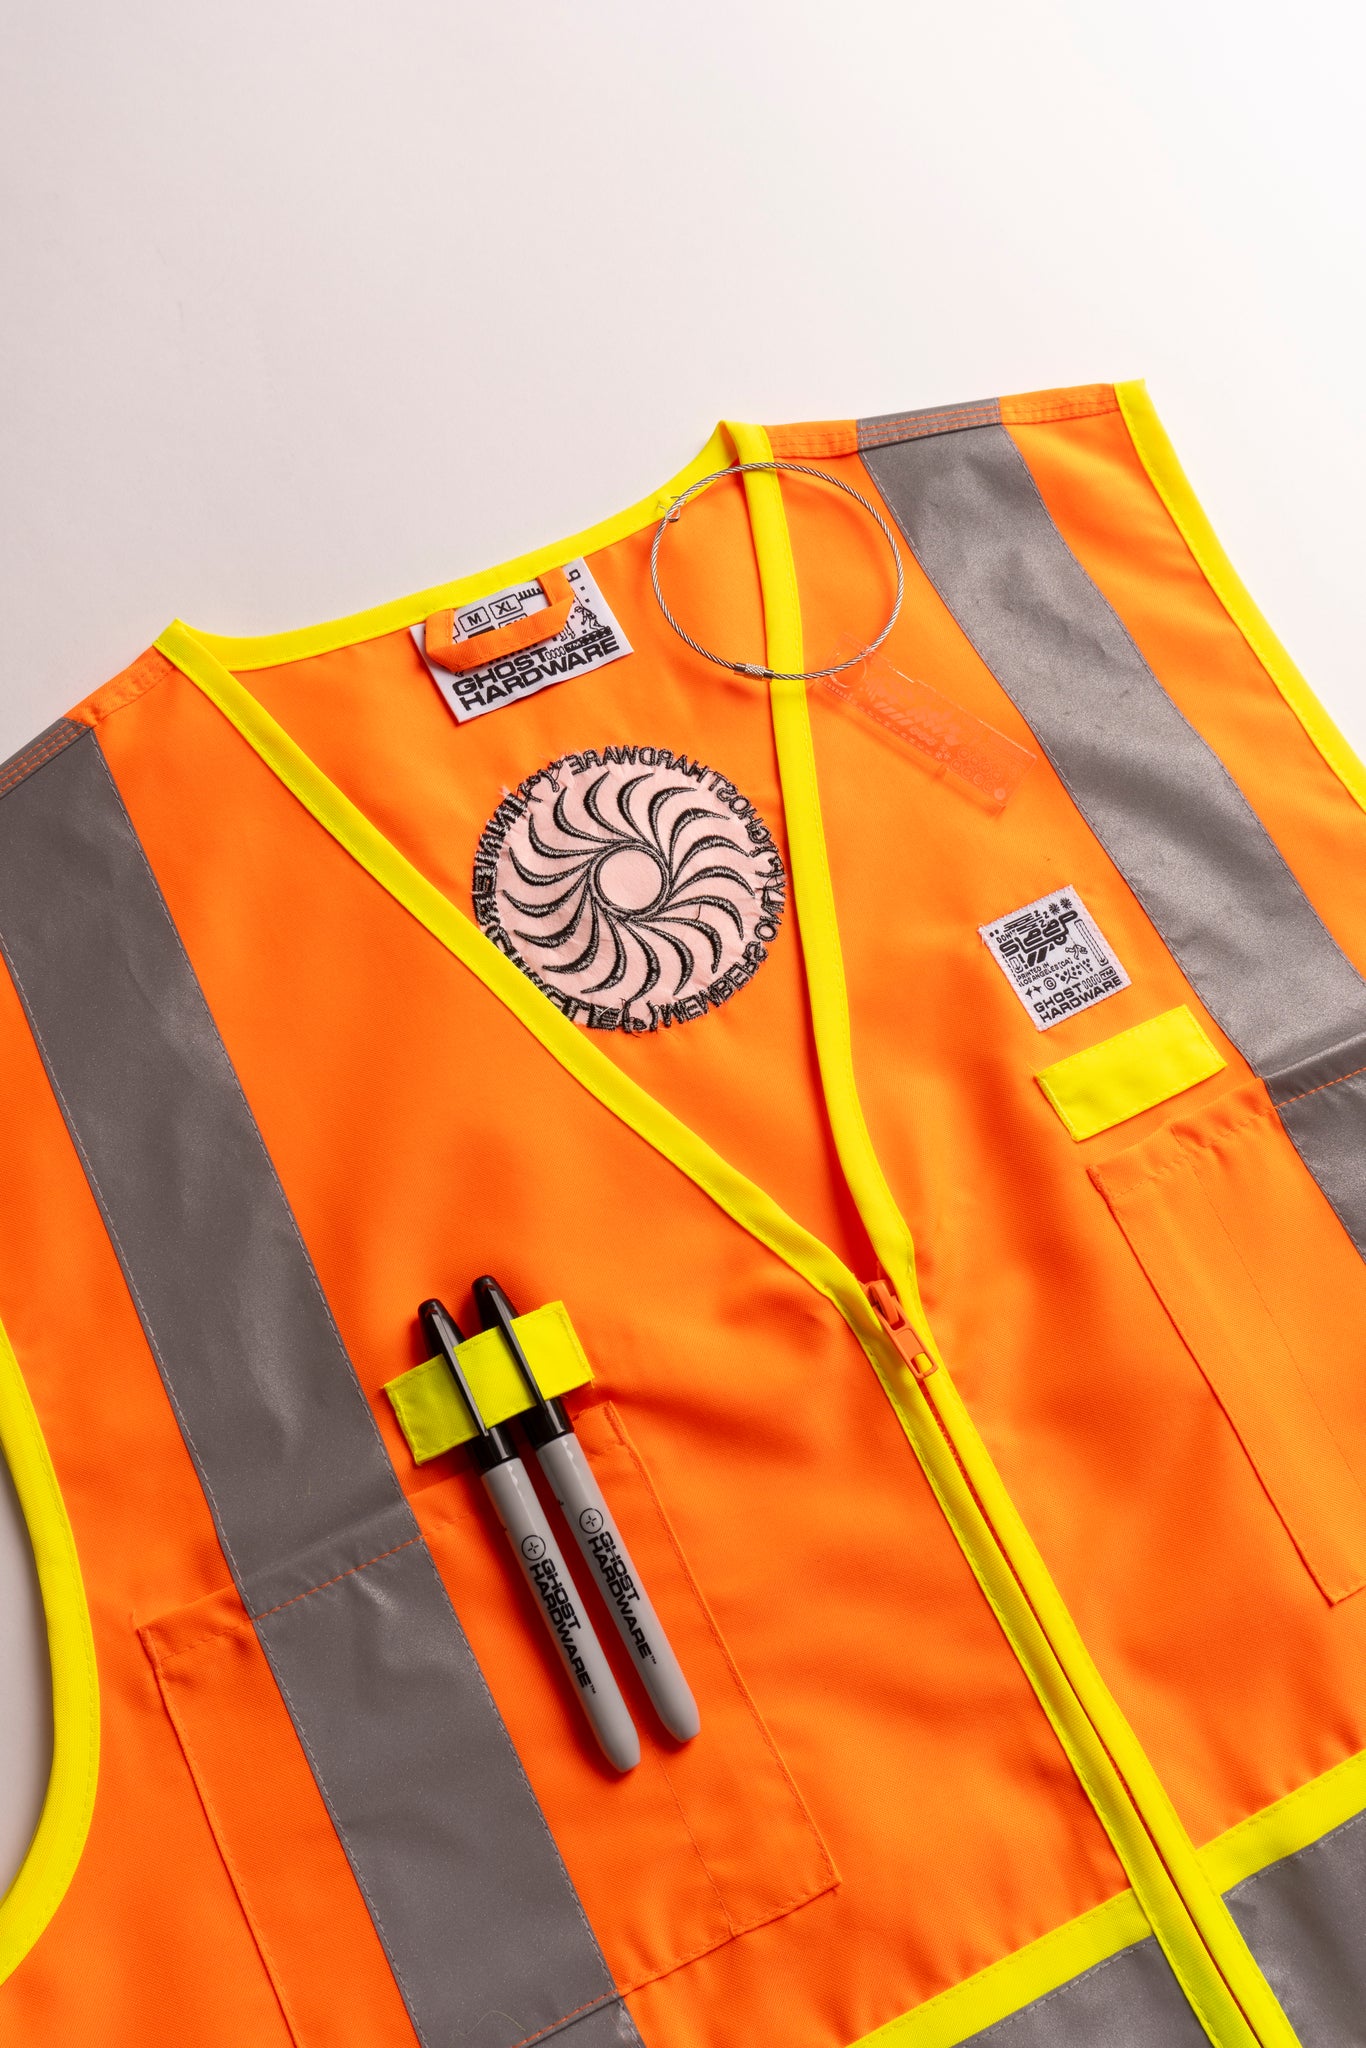 Ghost Hardware [ patch ] Safety Vest